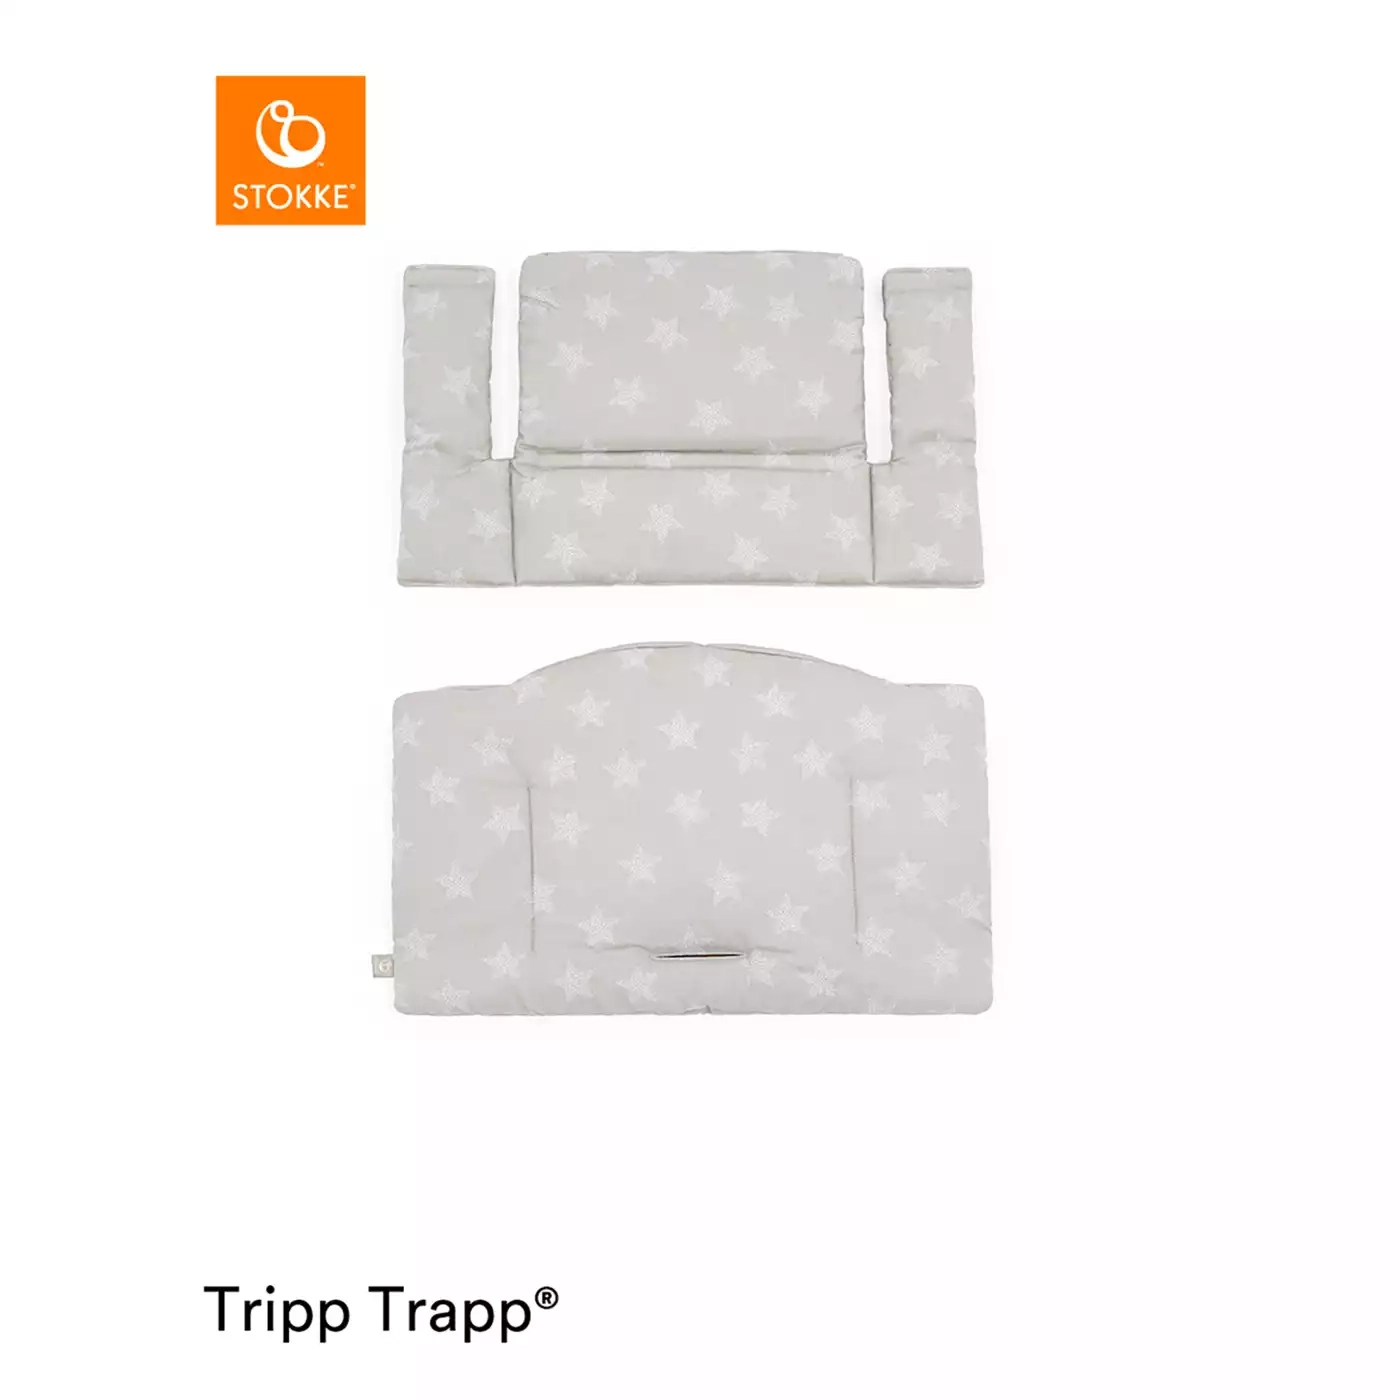 Tripp Trapp® Classic Kissen Star Silver STOKKE 2000580172201 3